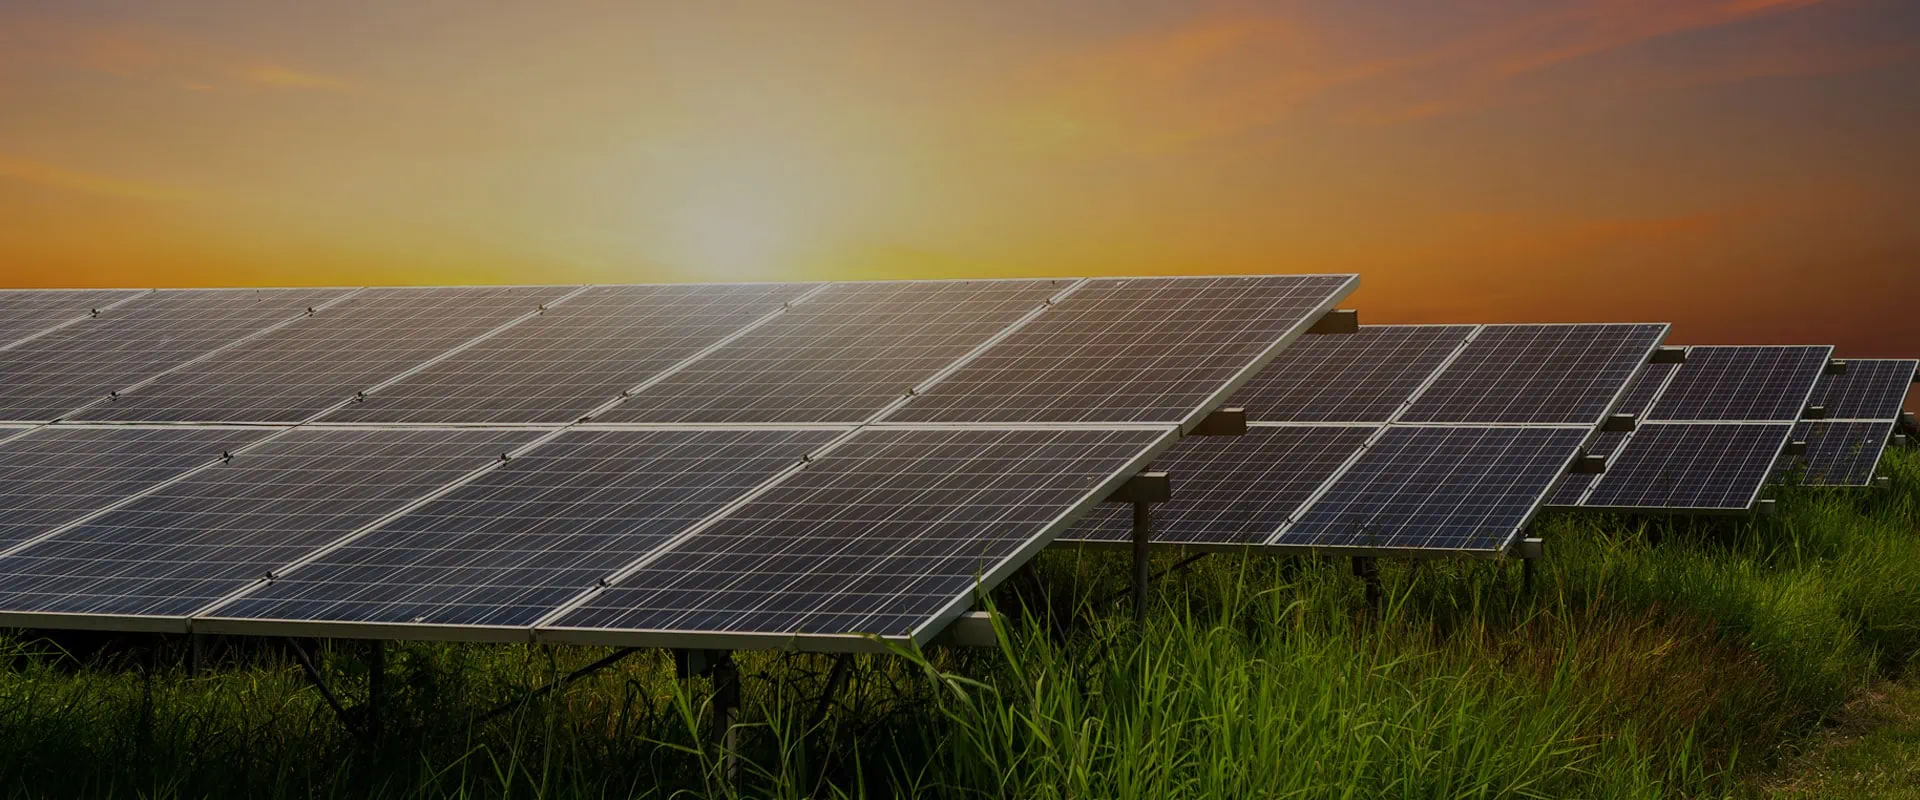 Universal Solar solar panel installation company in Texas